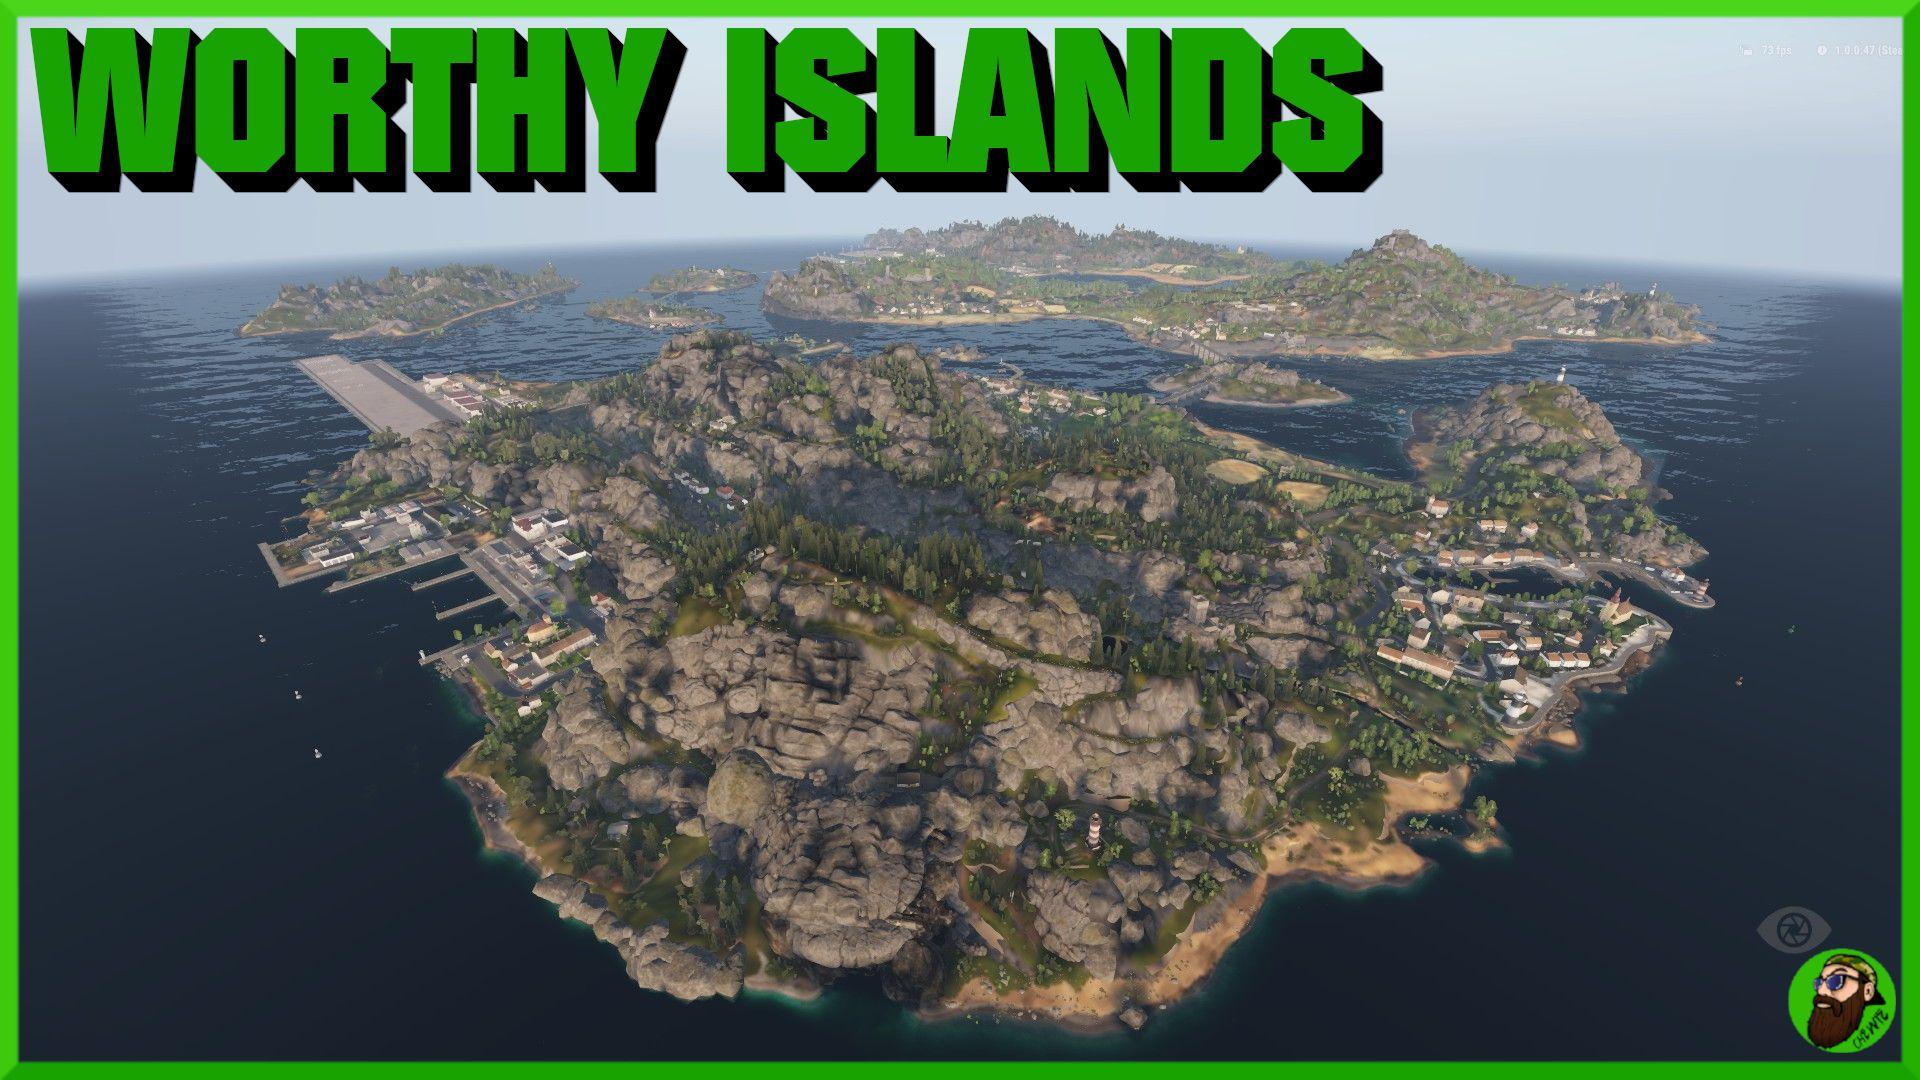 Worthy Islands